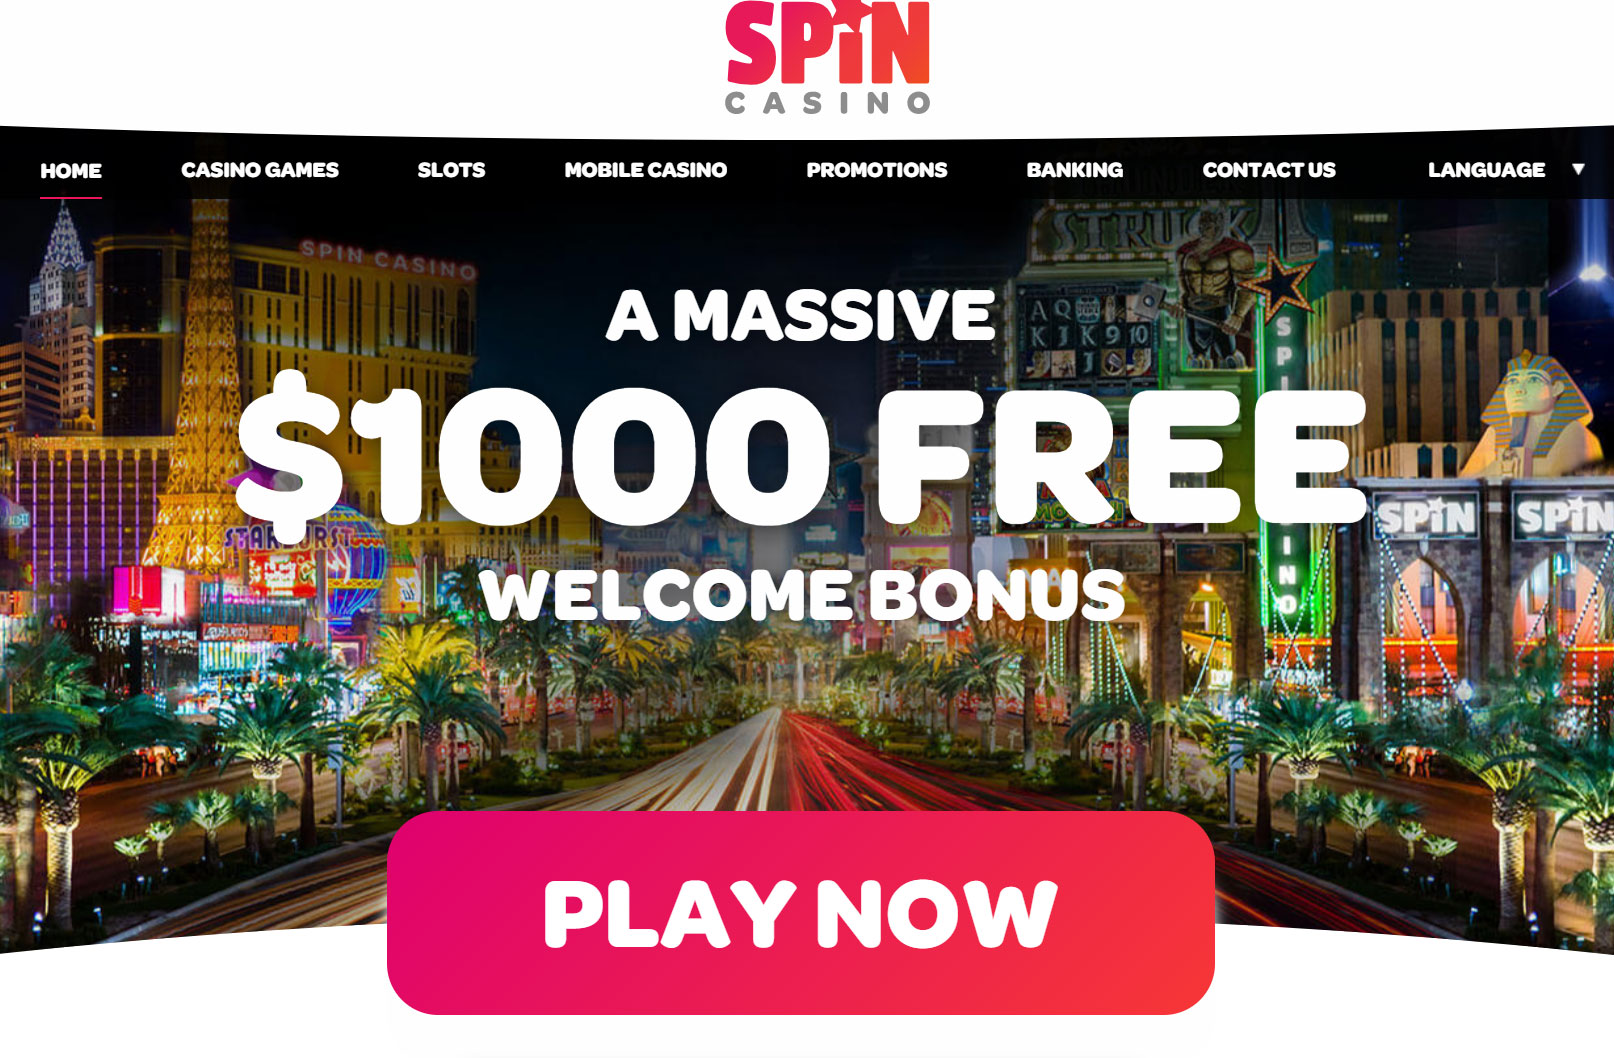 cash spins casino login